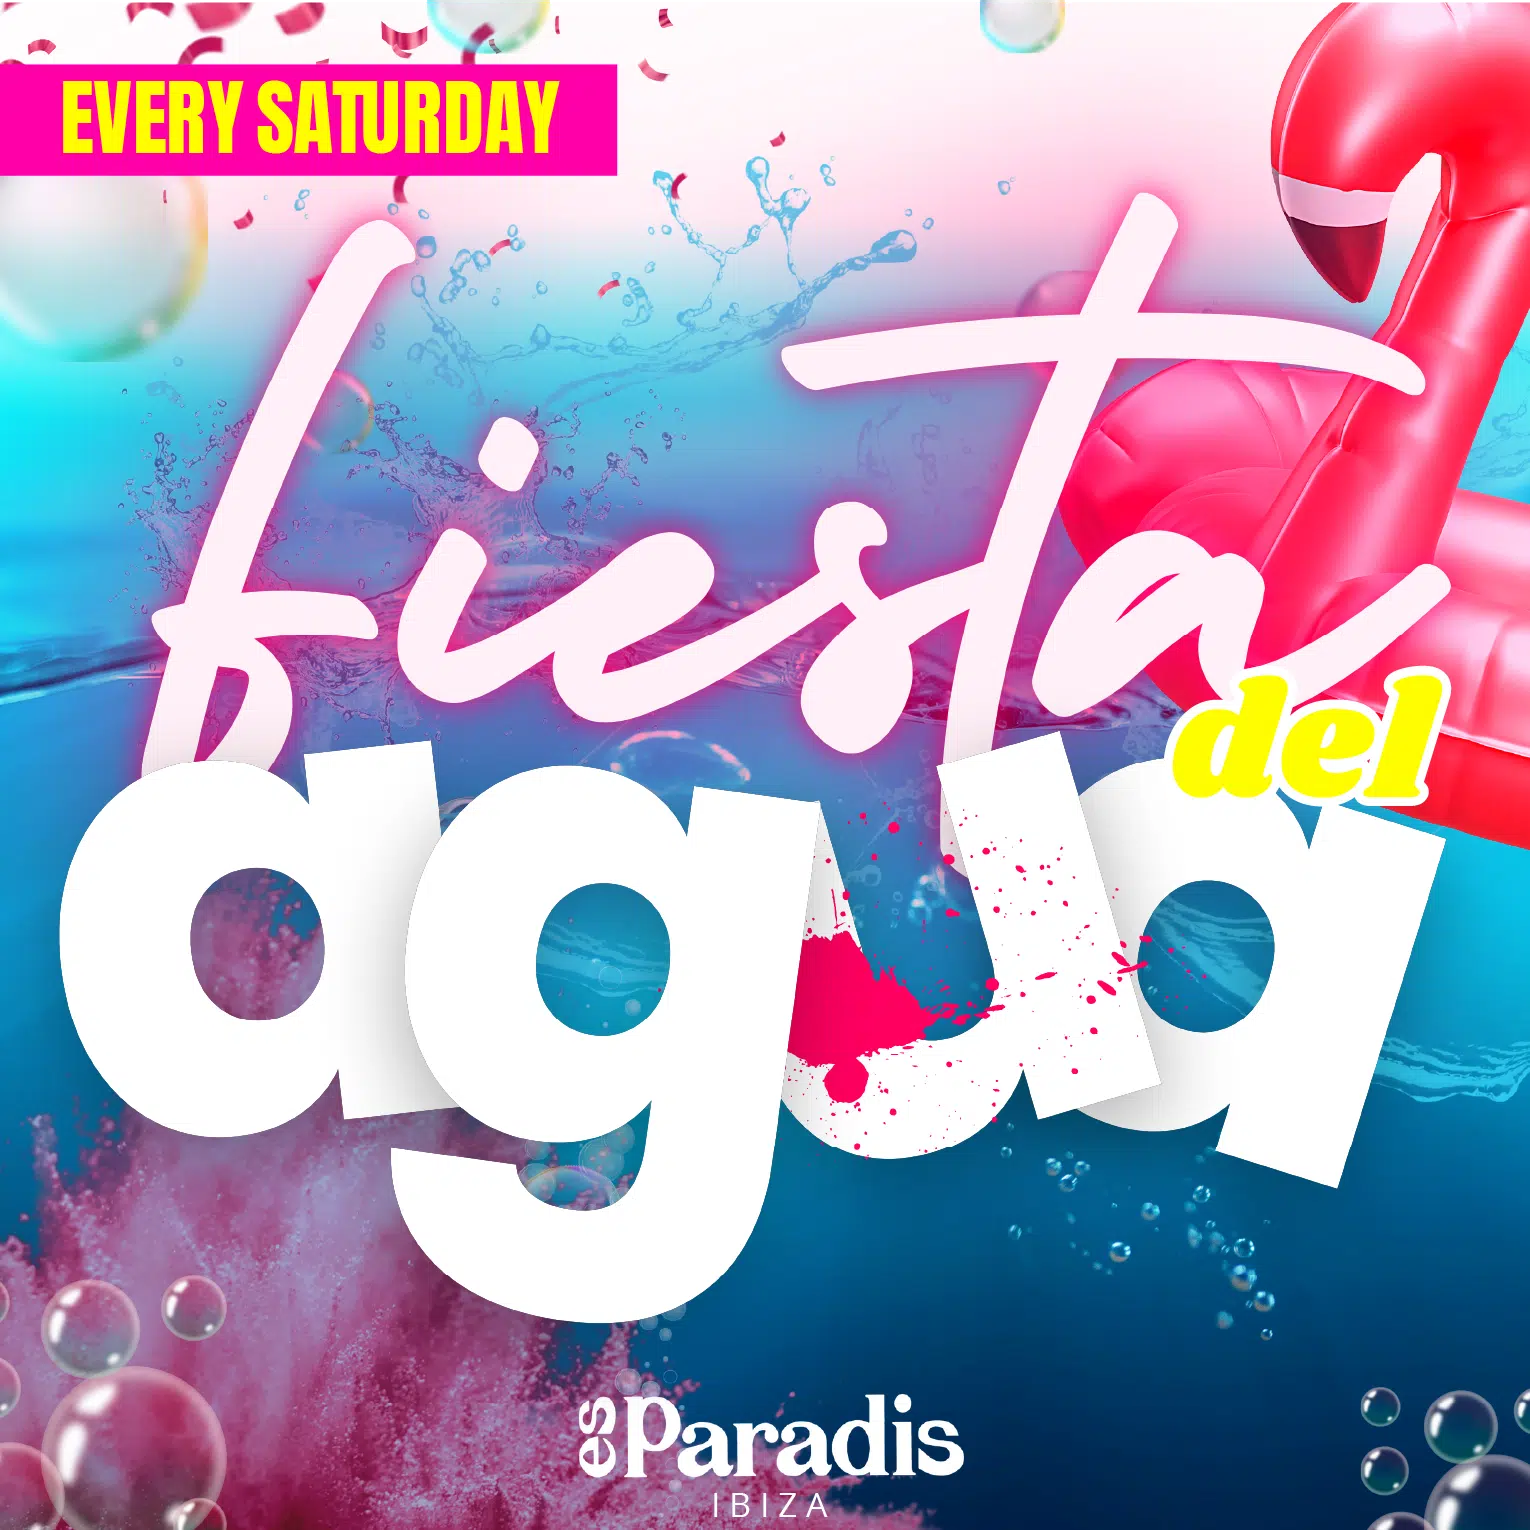 ES PARADIS party Fiesta del Agua - Water Party tickets and info, party calendar Es Paradis club ibiza